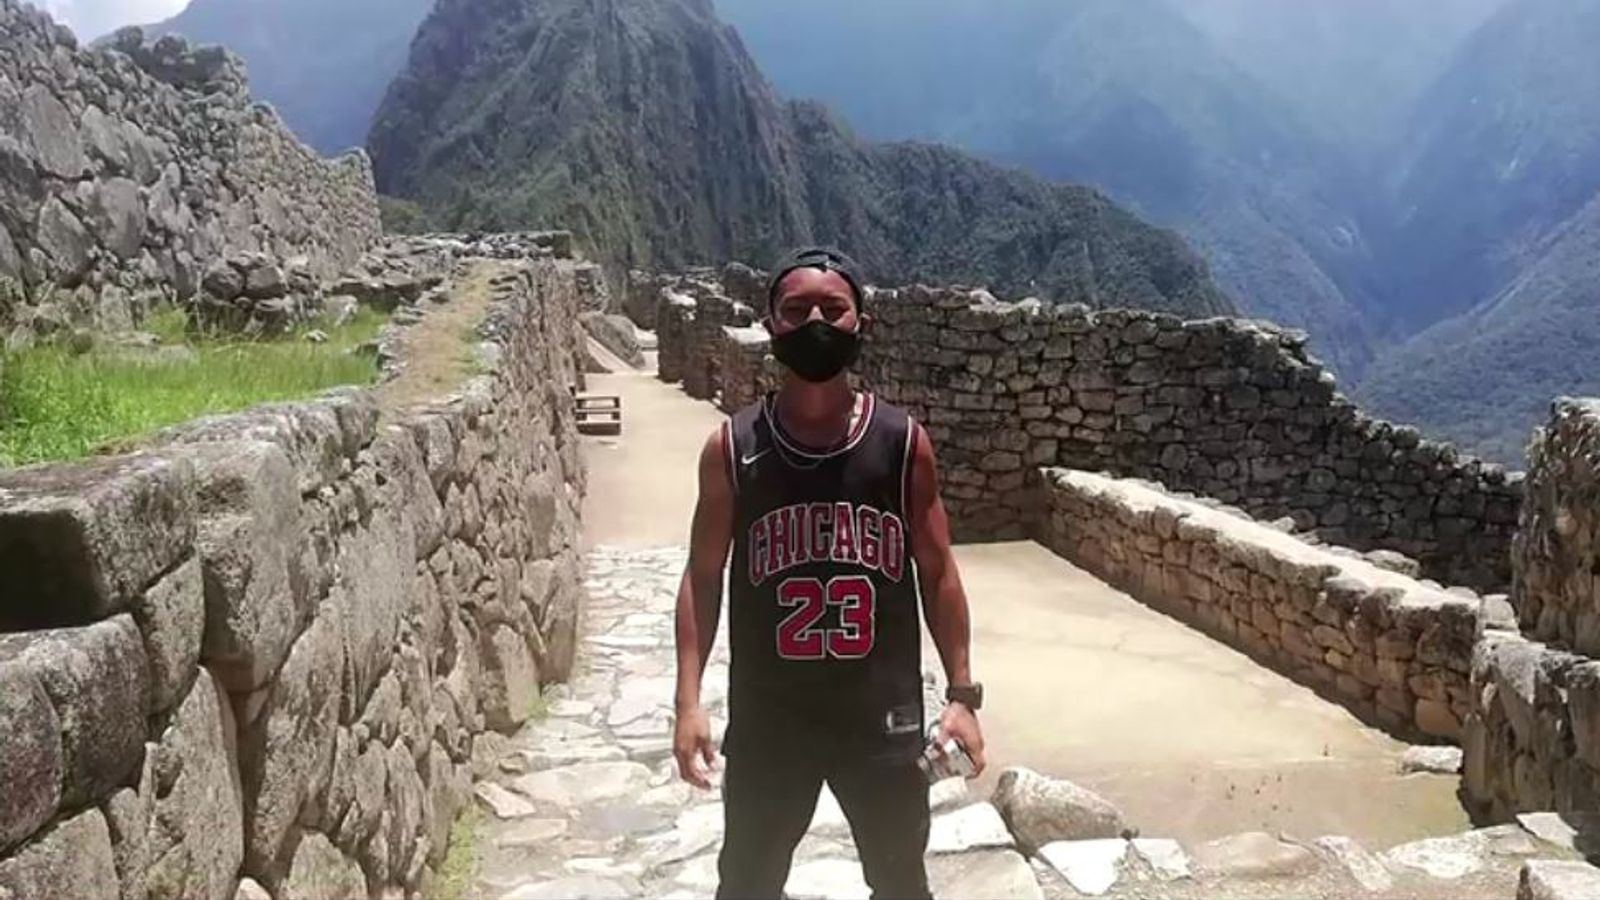 Turista visita Machu Picchu sozinho